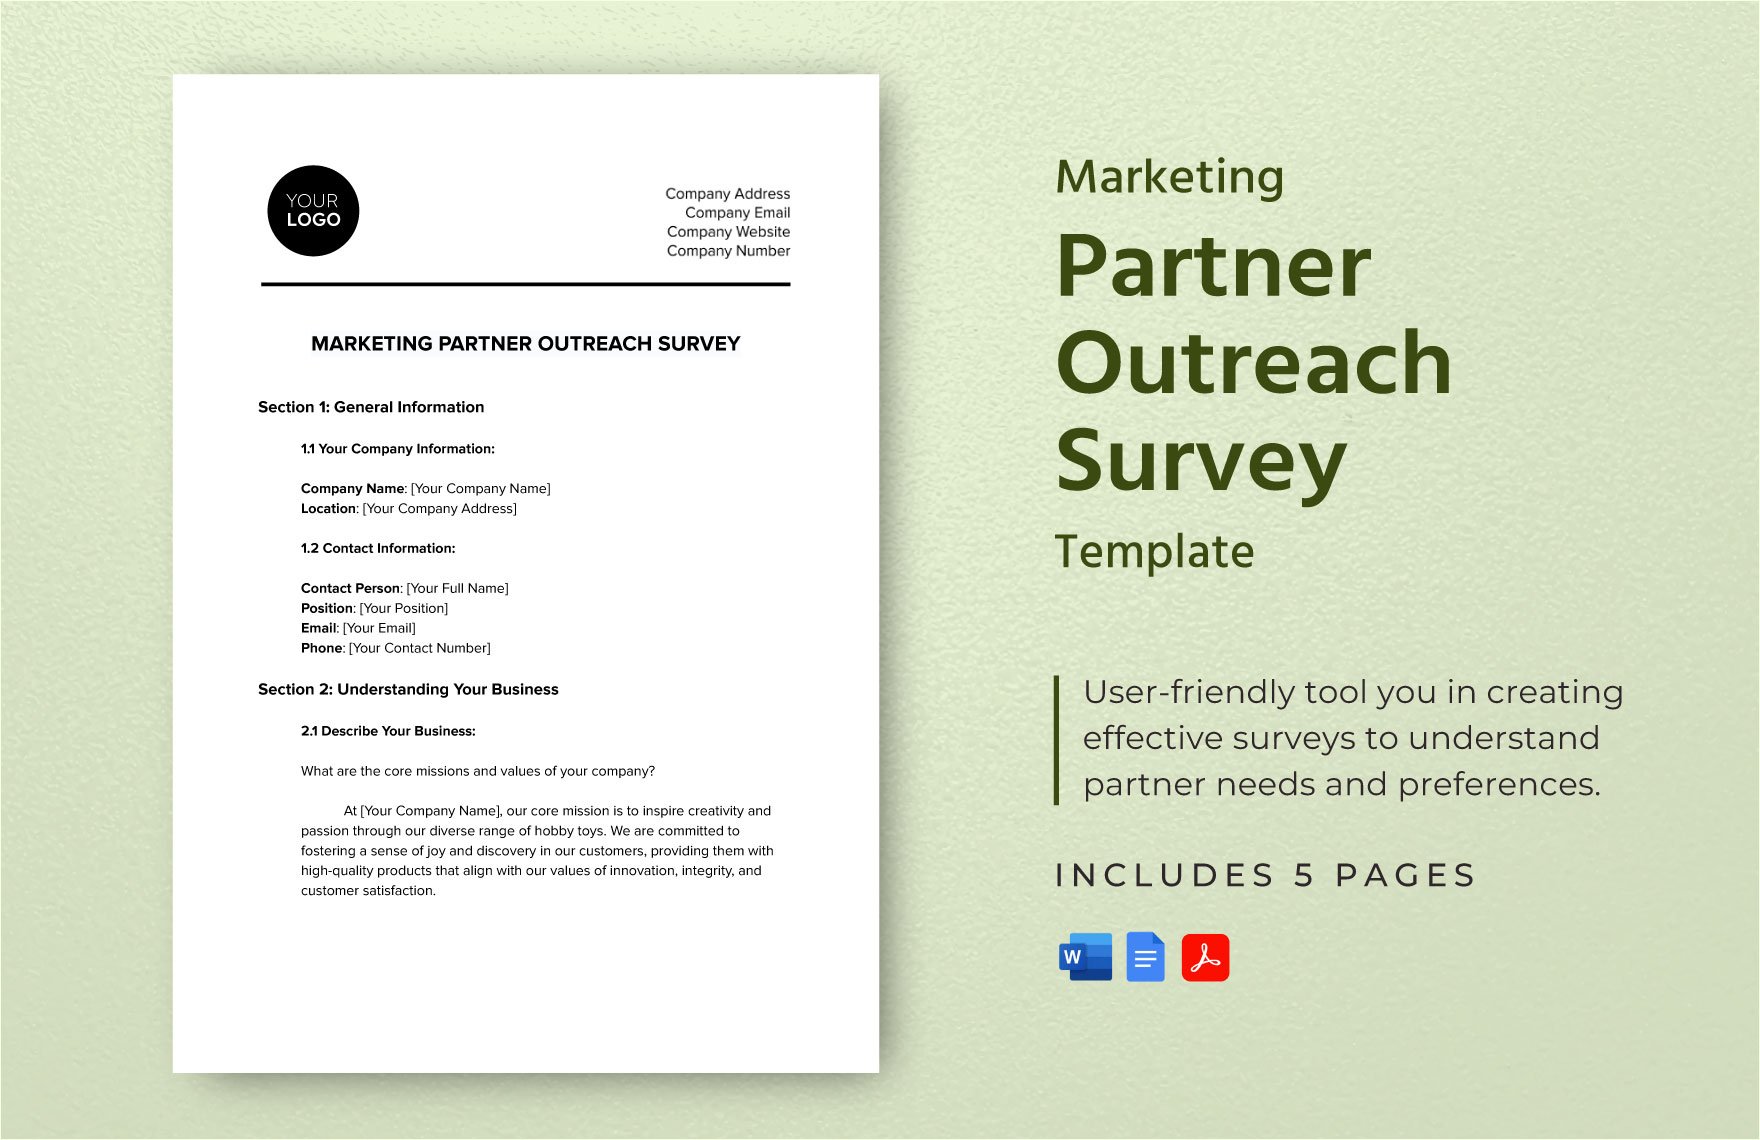 Marketing Partner Outreach Survey Template in Word, Google Docs, PDF